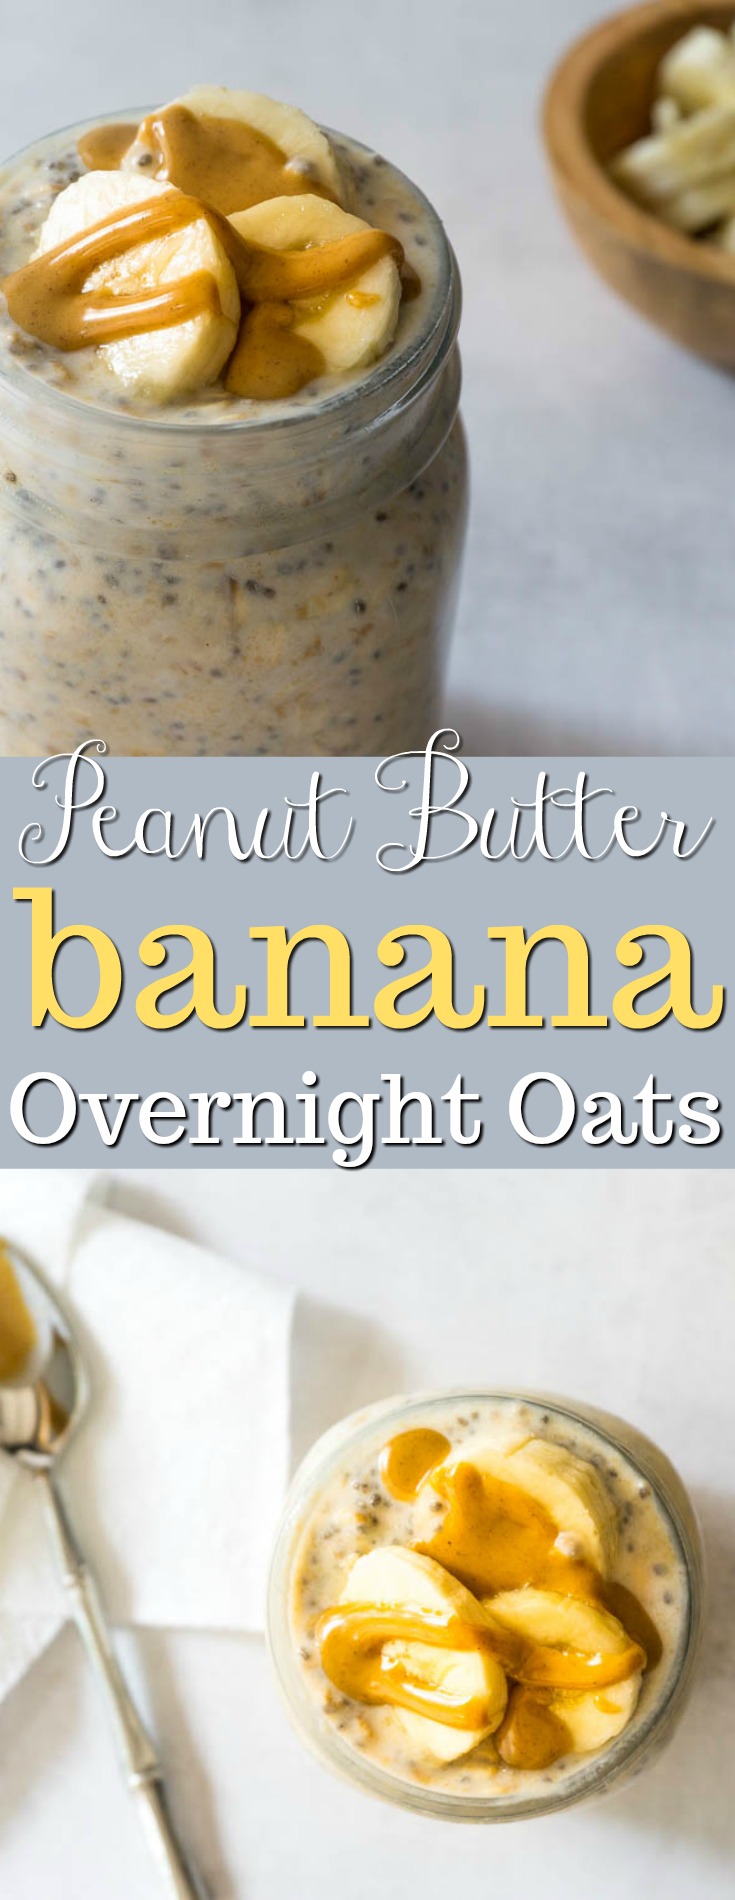 peanut butter and banana overnight oats